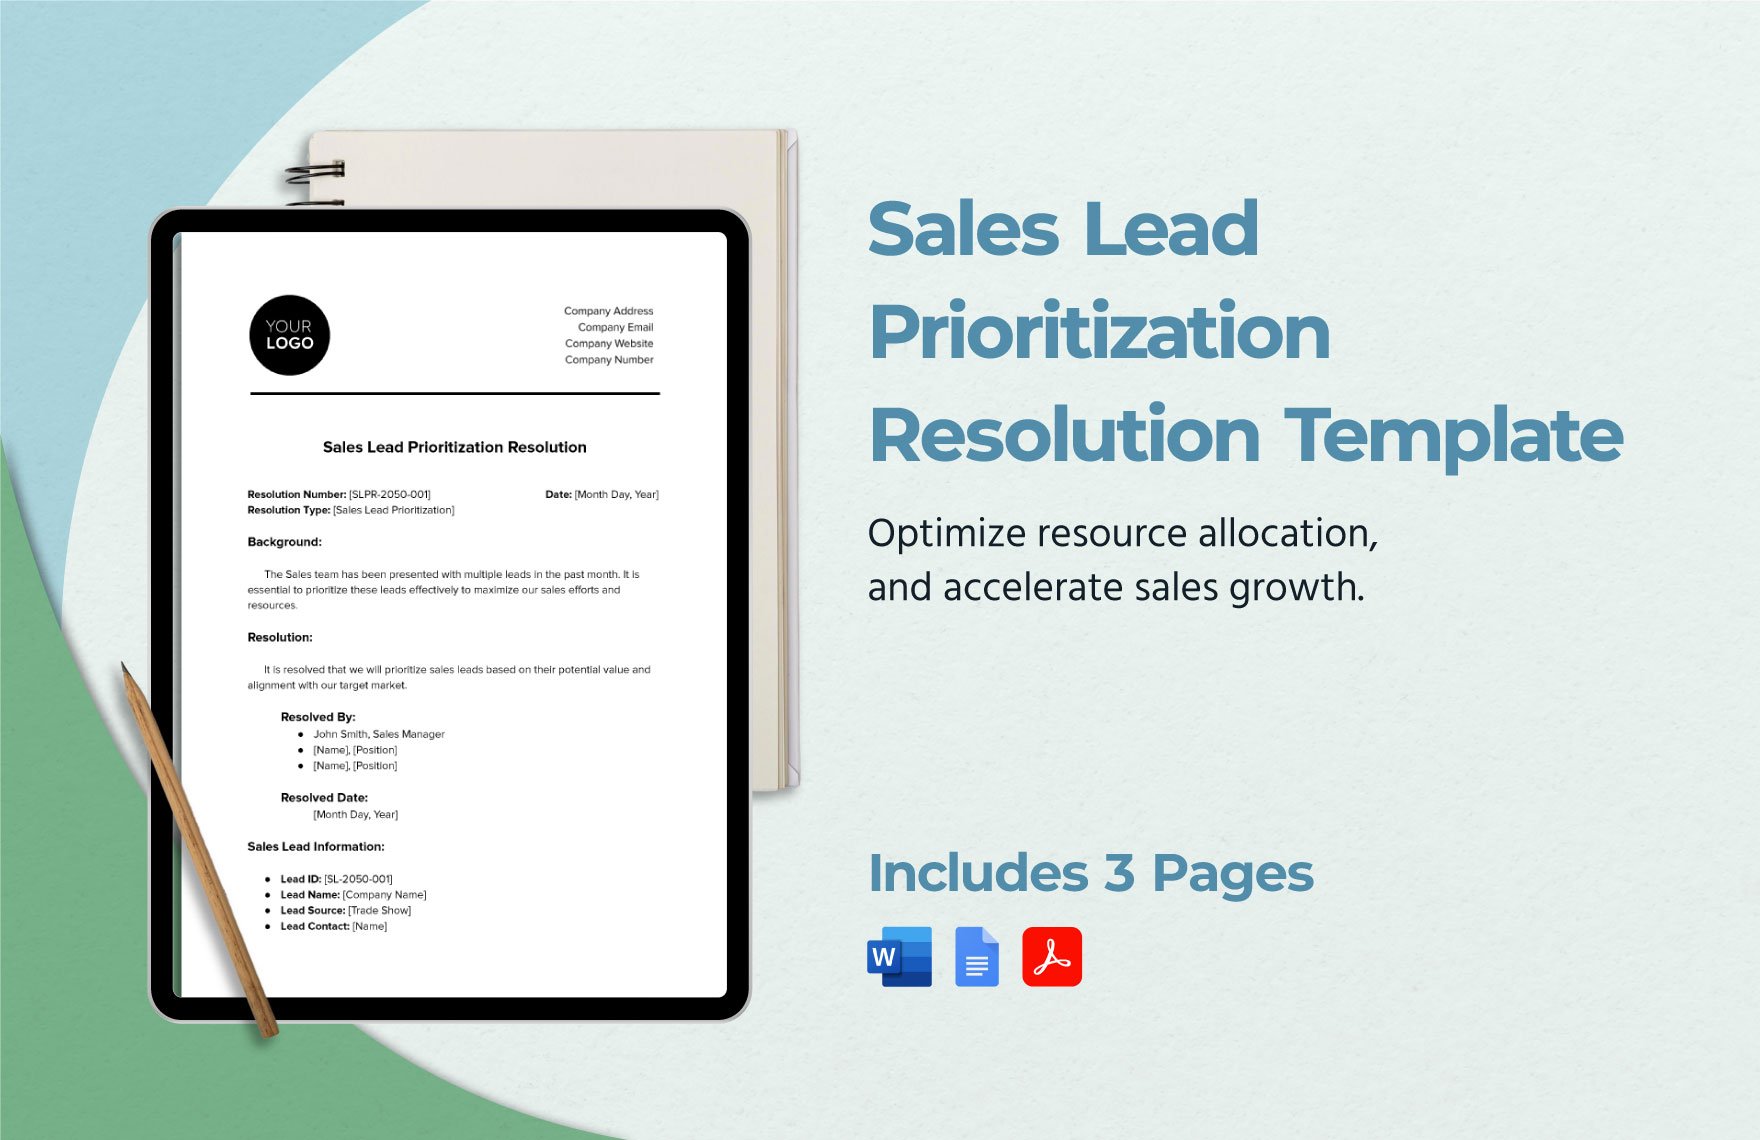 Sales Lead Prioritization Resolution Template